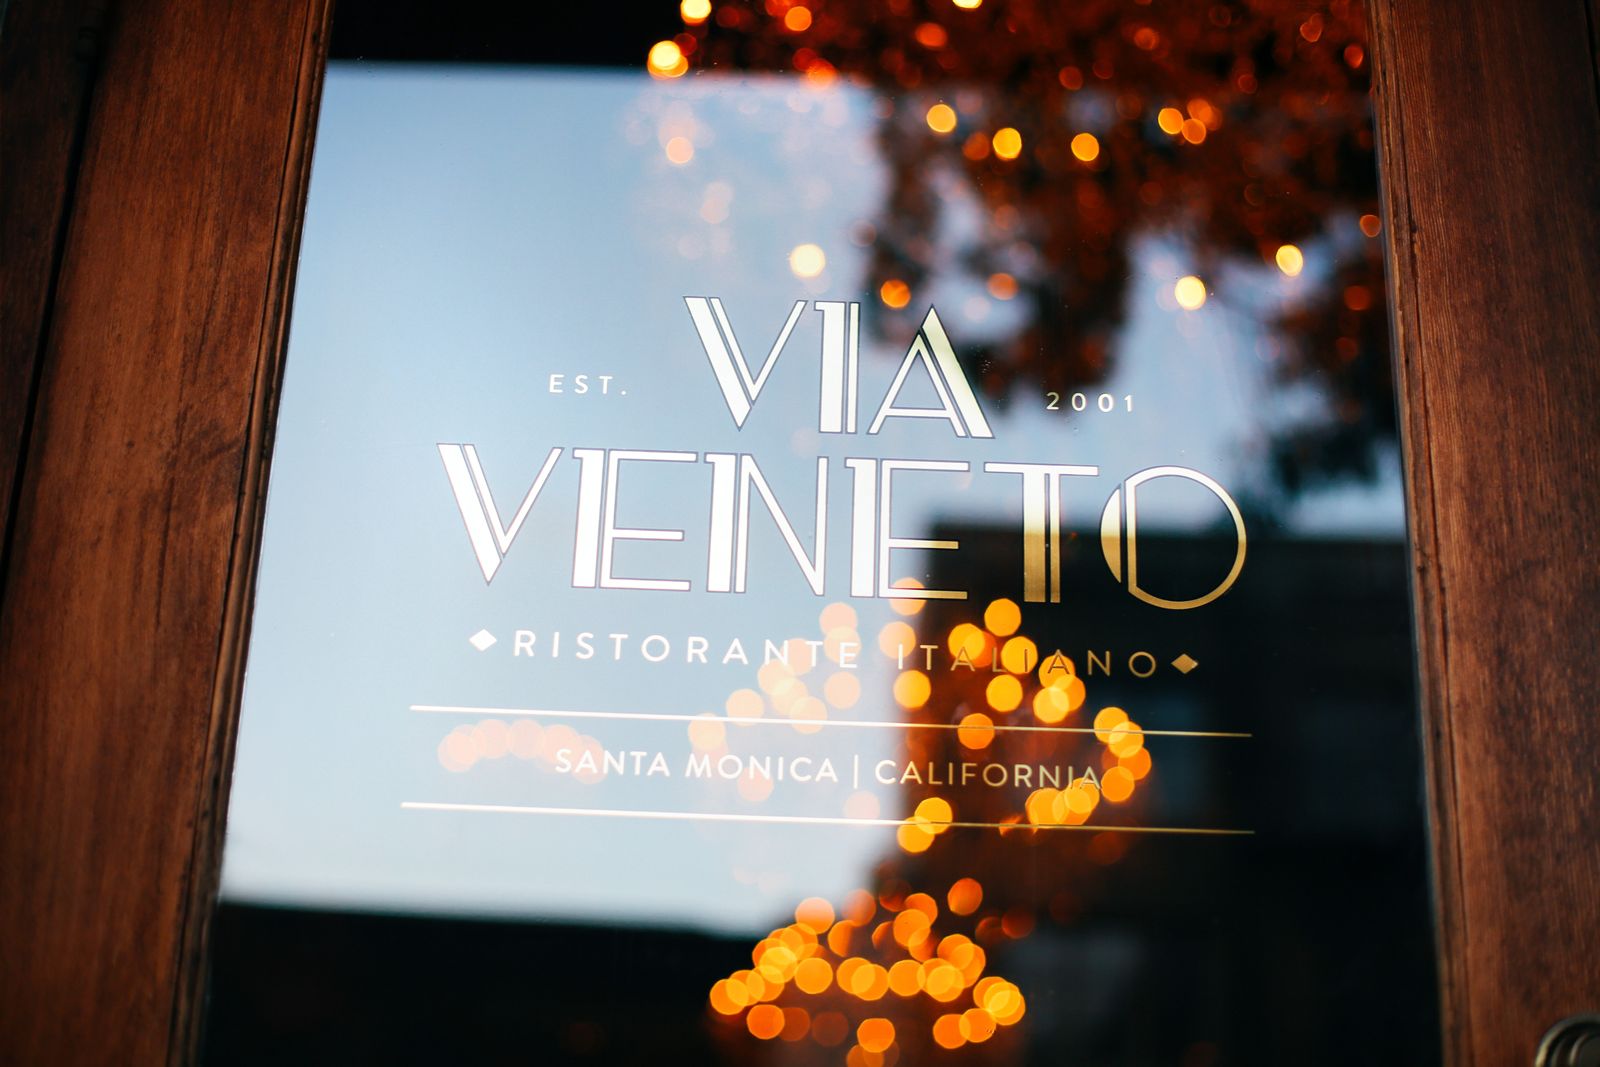 Foodie and Celebrity Destination, Via Veneto, Celebrates 20 Years